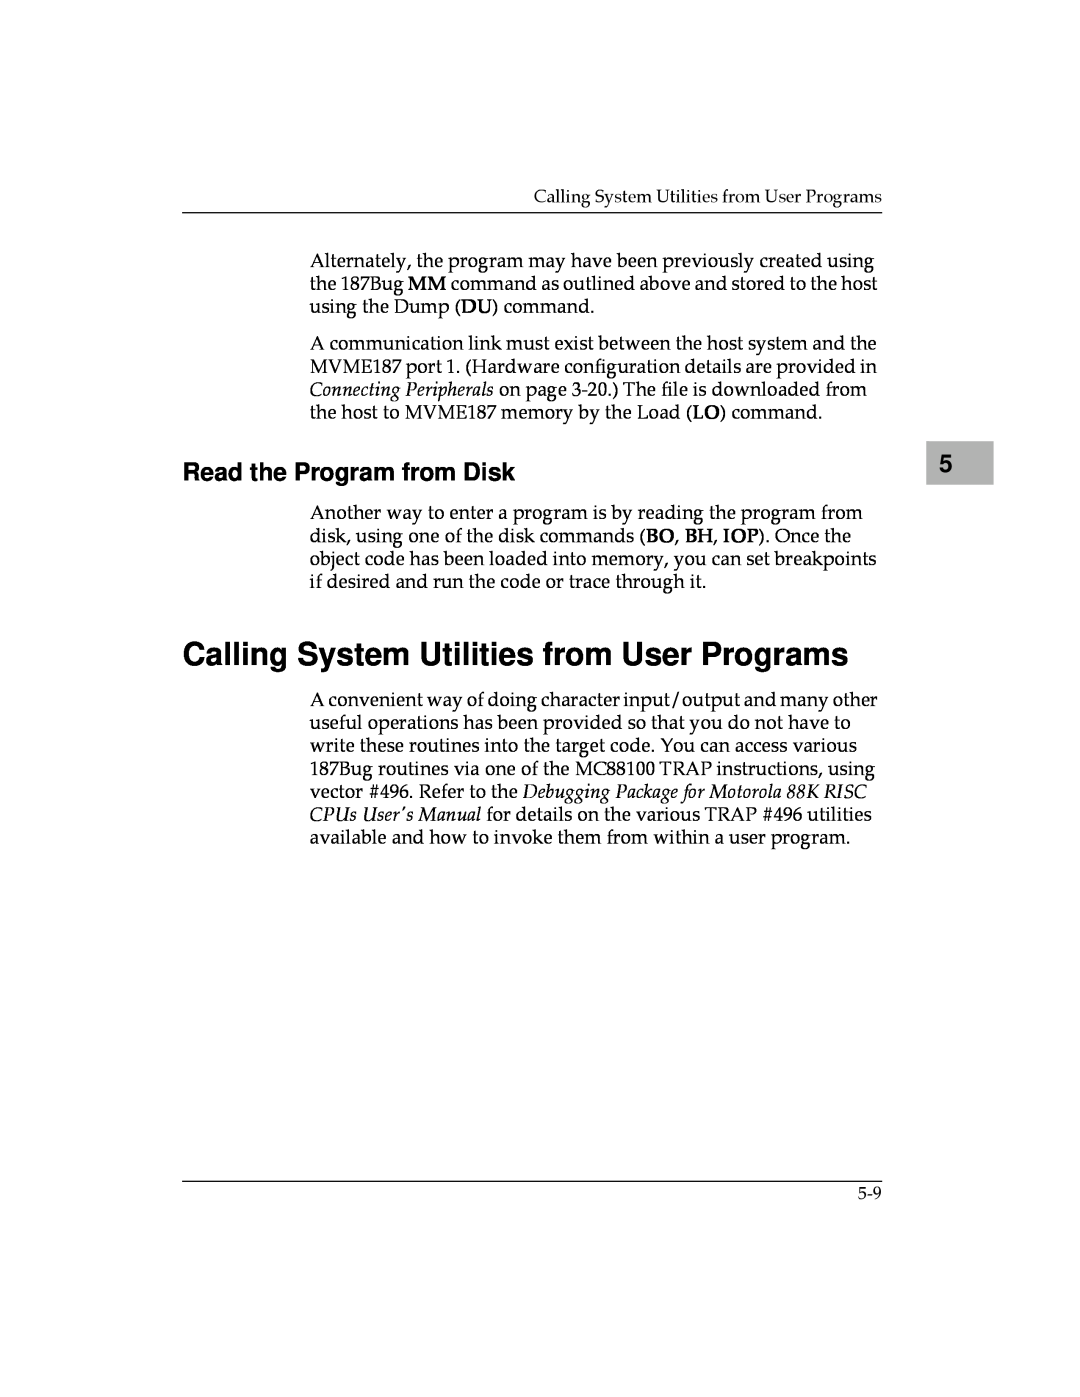 Motorola MVME187 manual Calling System Utilities from User Programs, Read the Program from Disk 